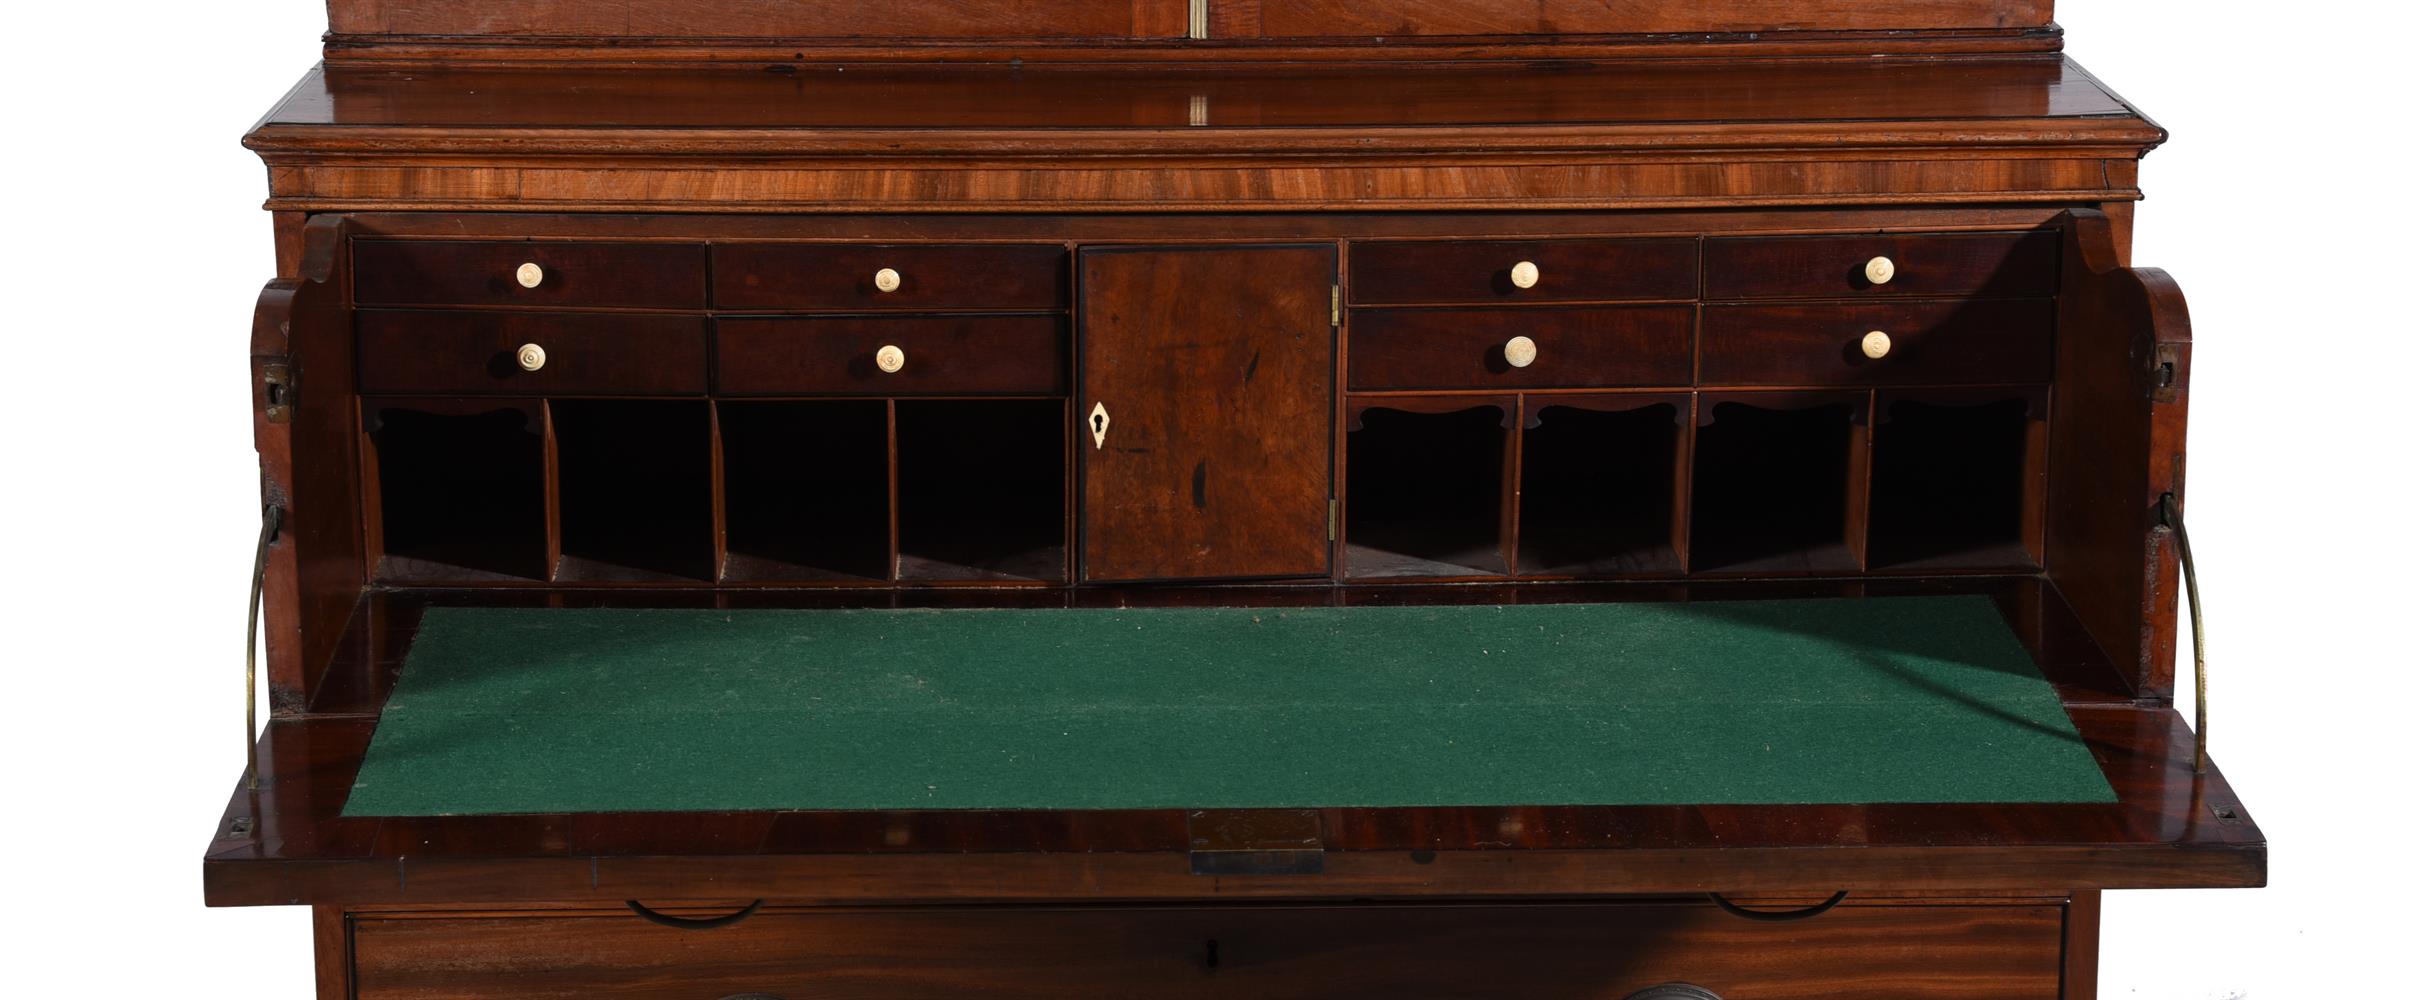 A George III mahogany secretaire bookcase - Image 2 of 2